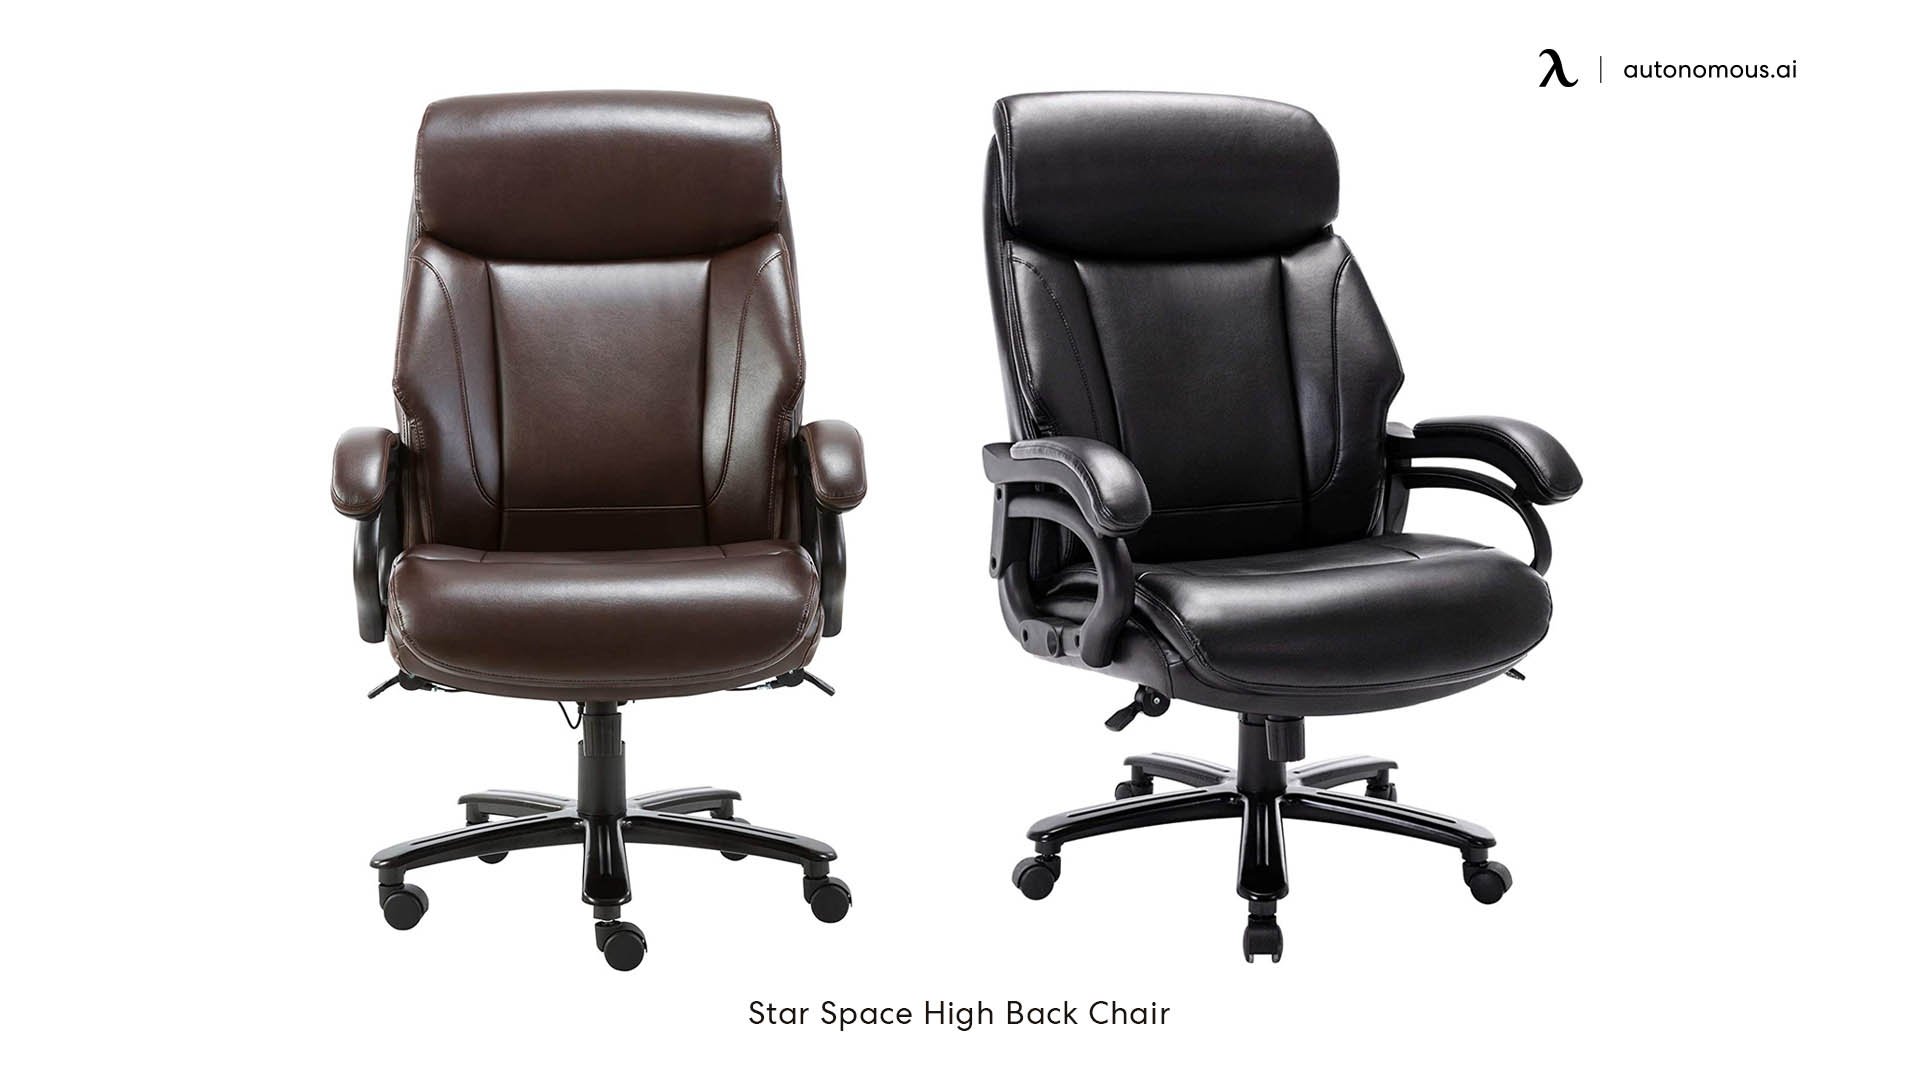 Star Space High Back Chair